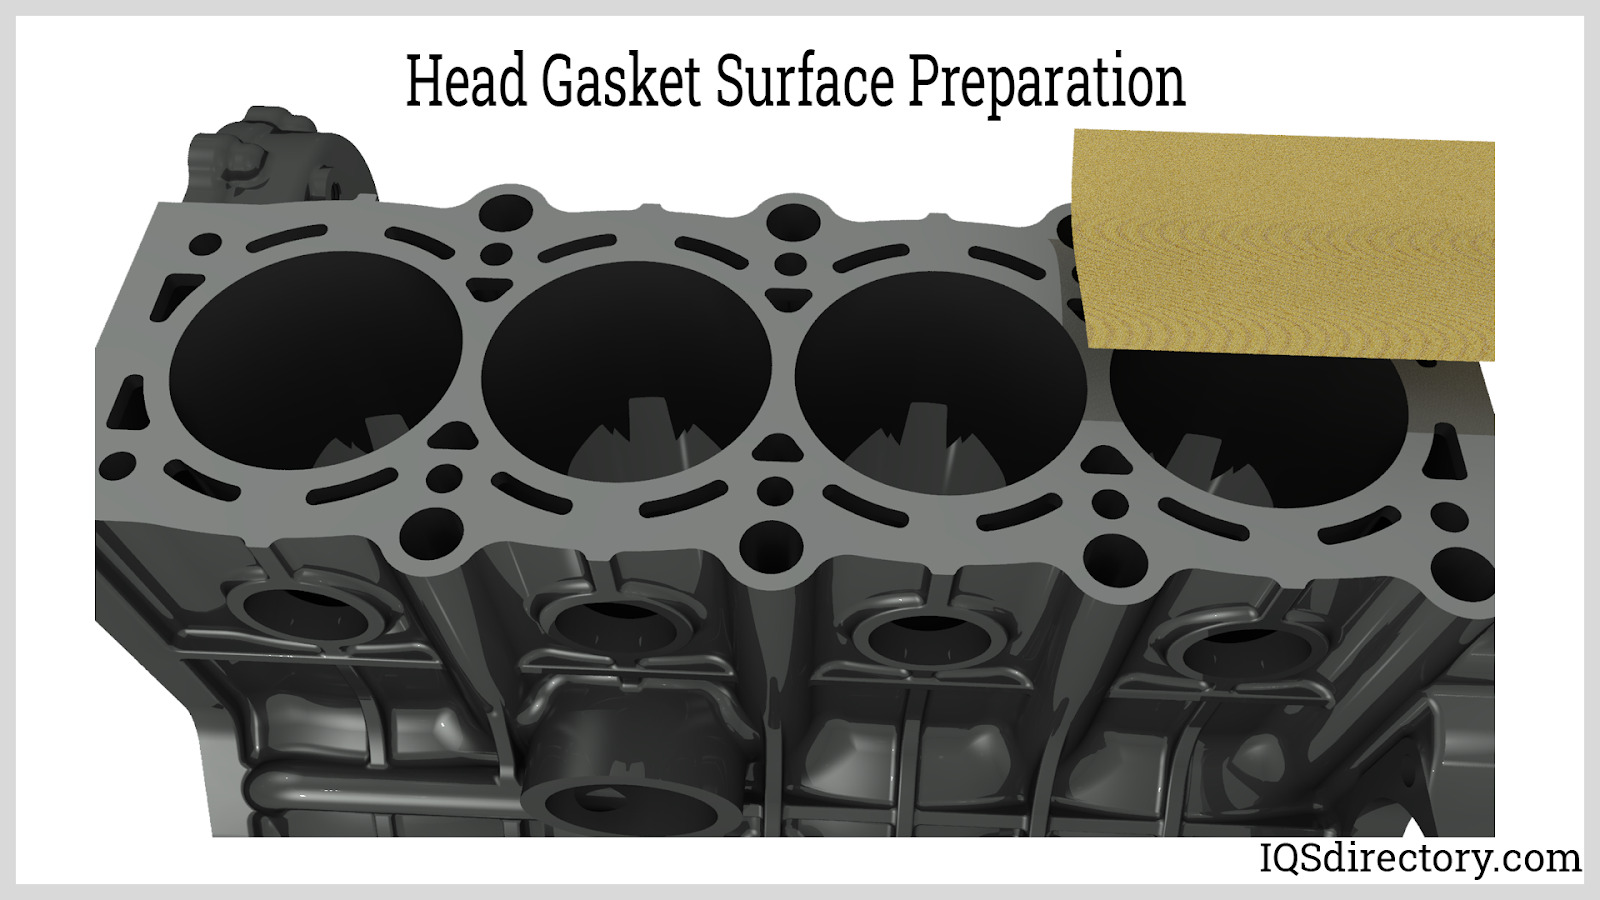 Head Gasket Surface Preparation